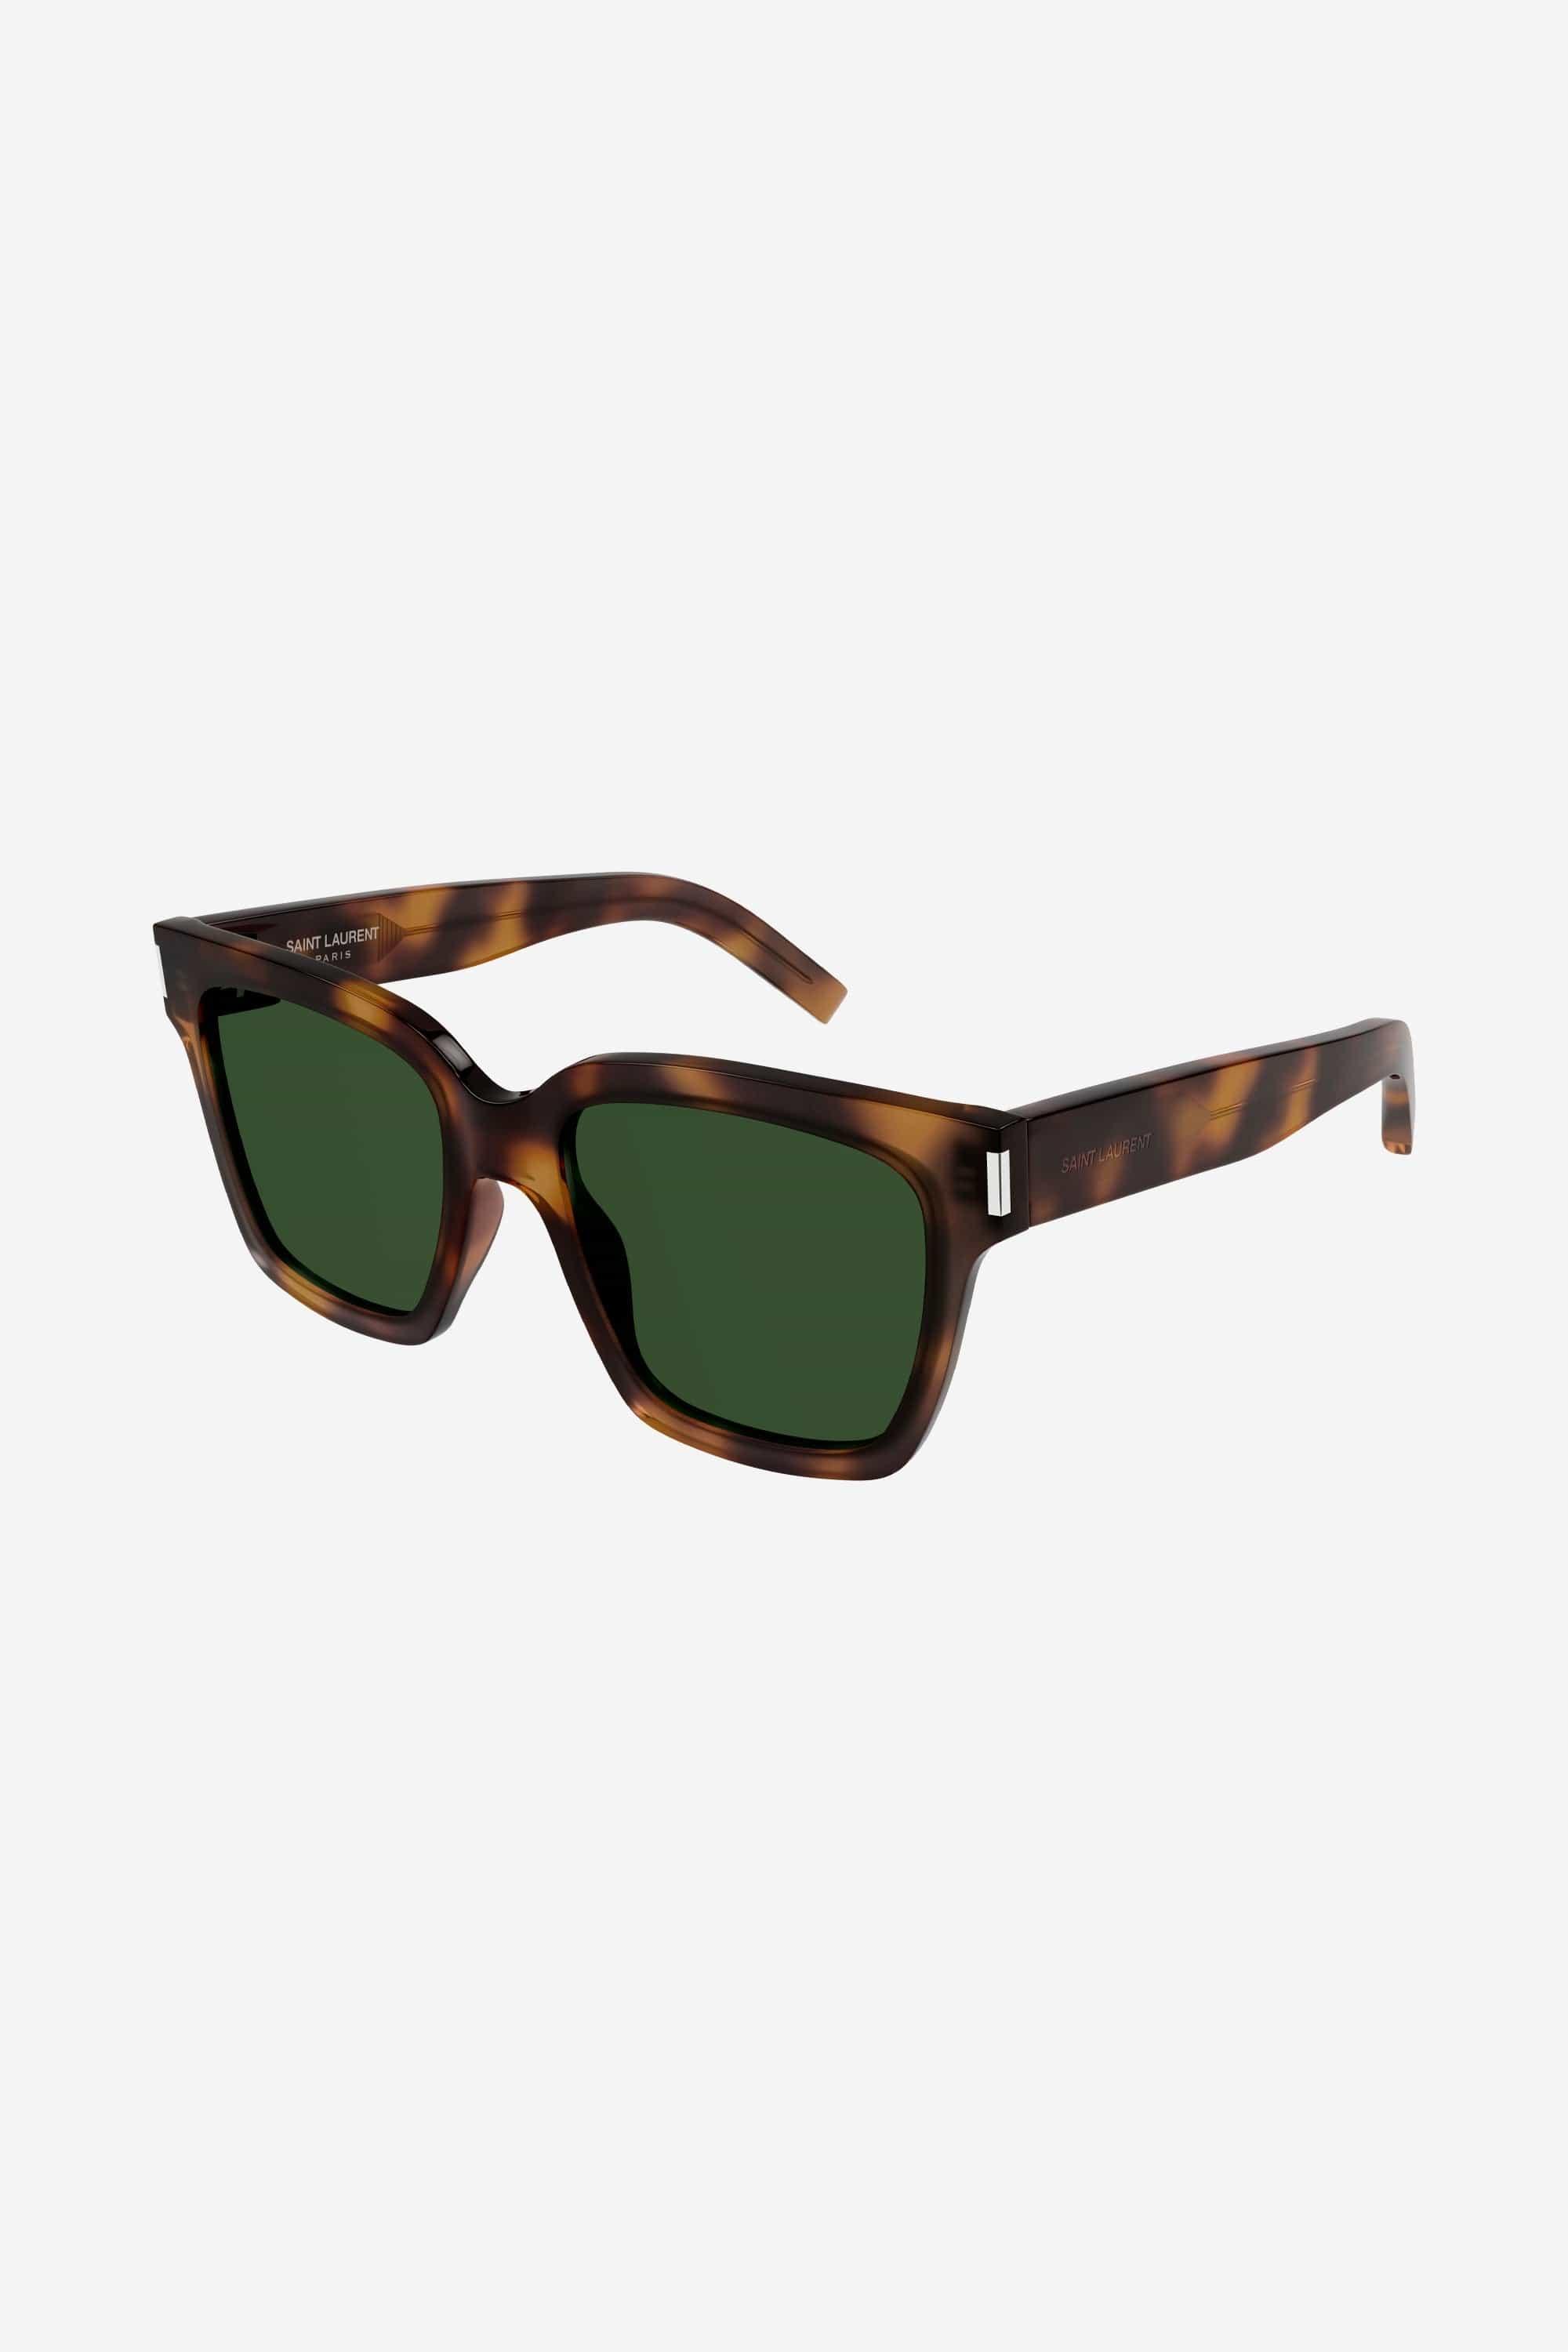 Saint Laurent Havana Rectangular Sunglasses in Green